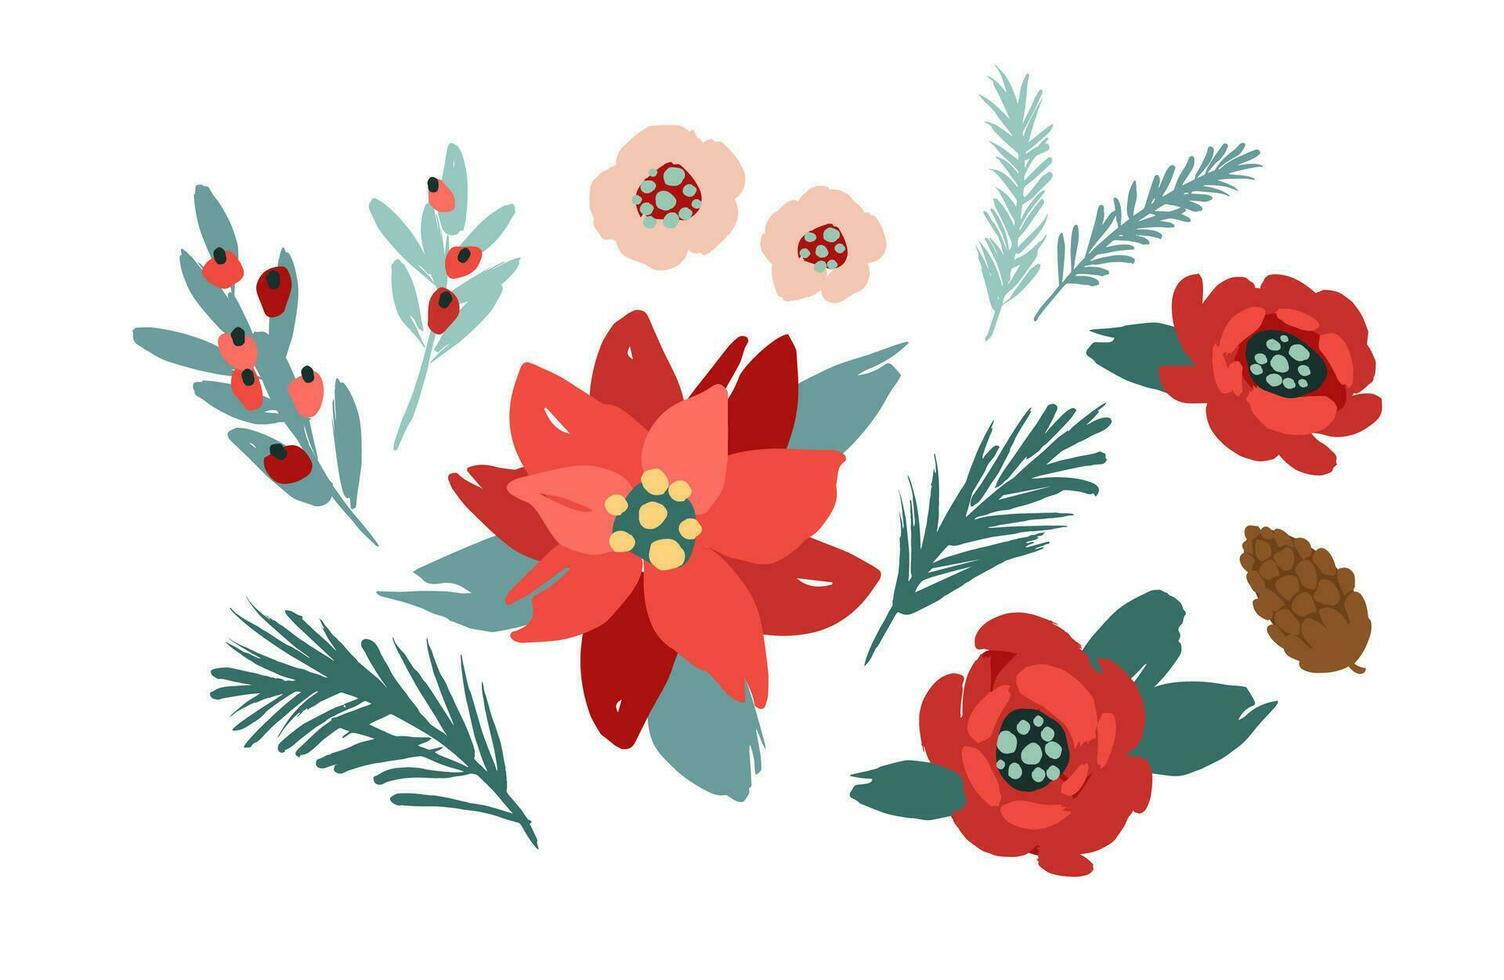 Set of Christmas floral design elements. Flowers, leaves, needles, berries Vector illustrations